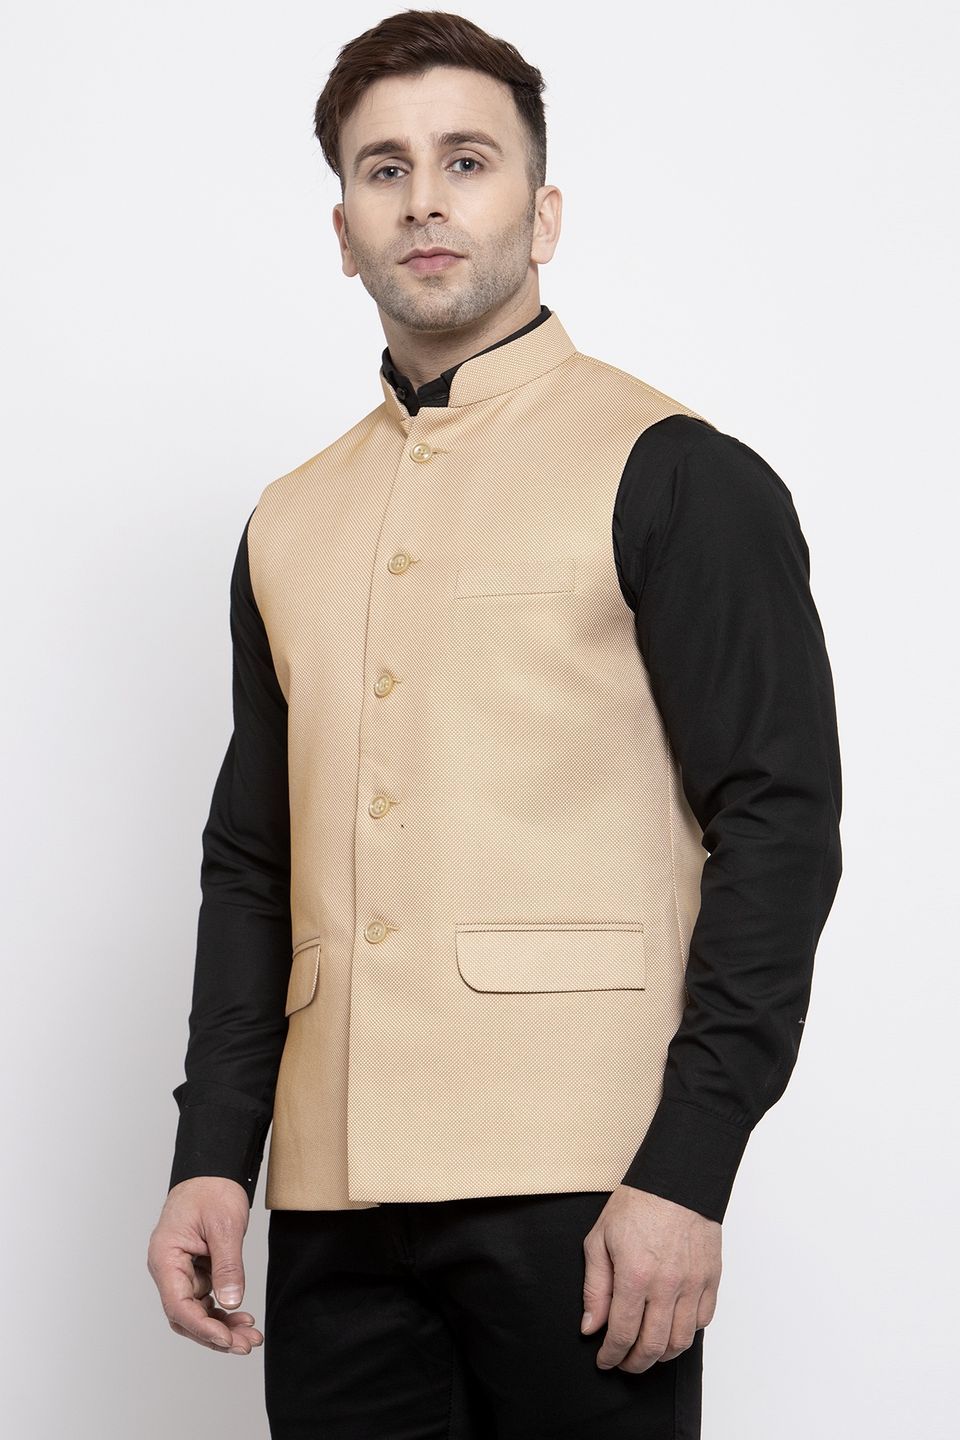 Wintage Men's Poly Cotton Festive and Casual Nehru Jacket Vest Waistcoat : Beige